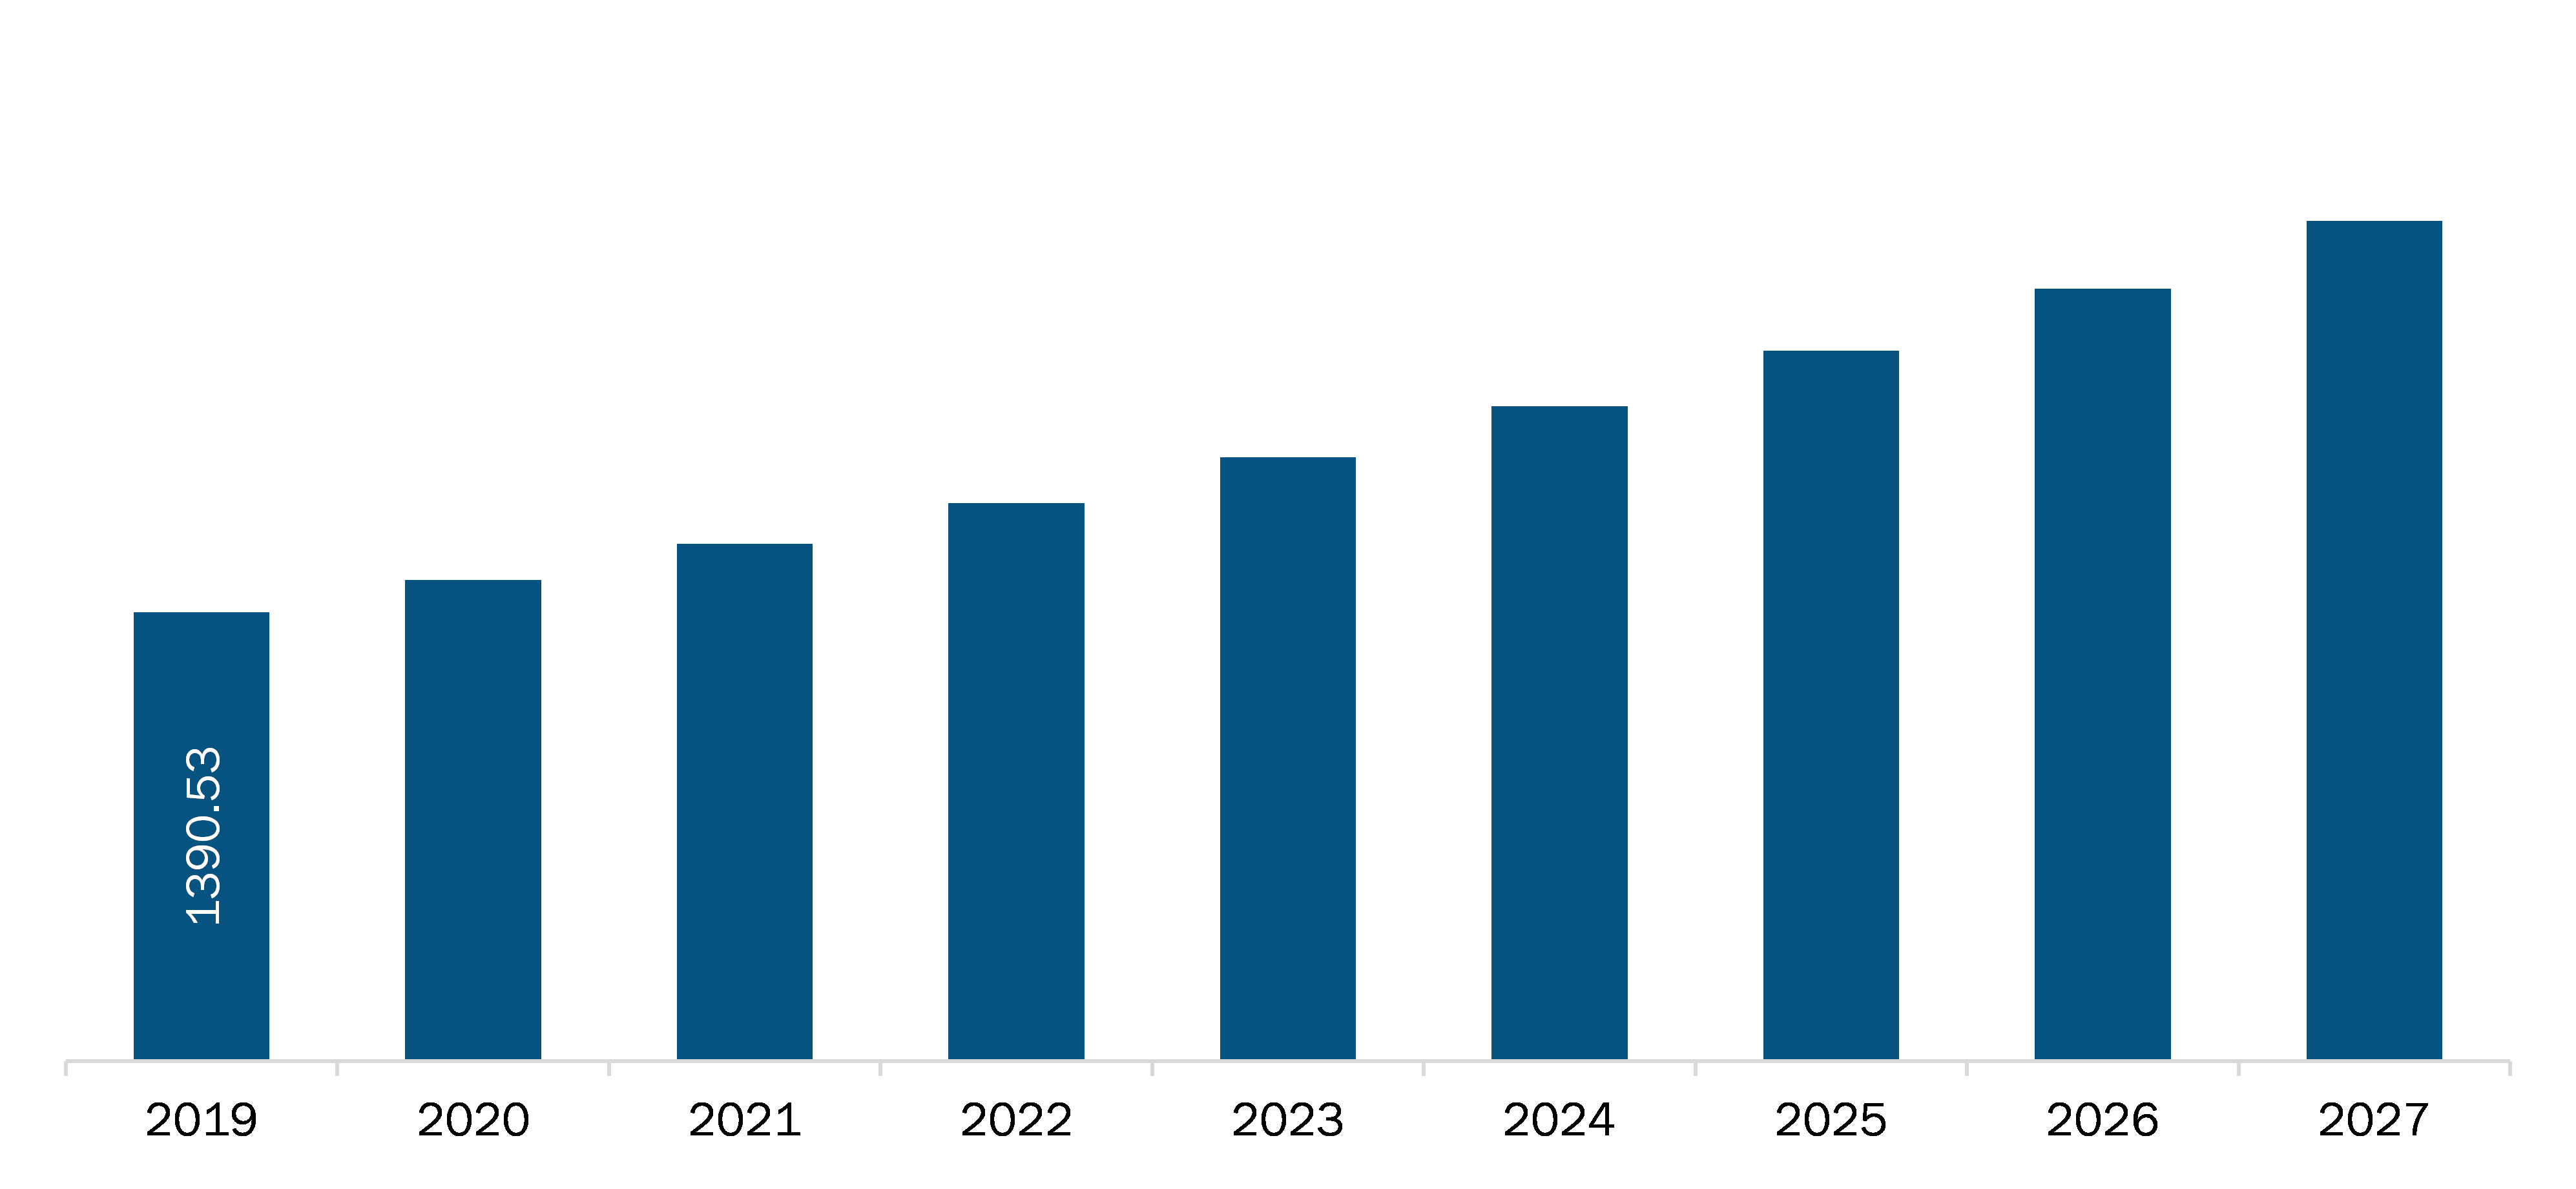 North America Liposome Drug Delivery Market revenue and forecast to 2027: